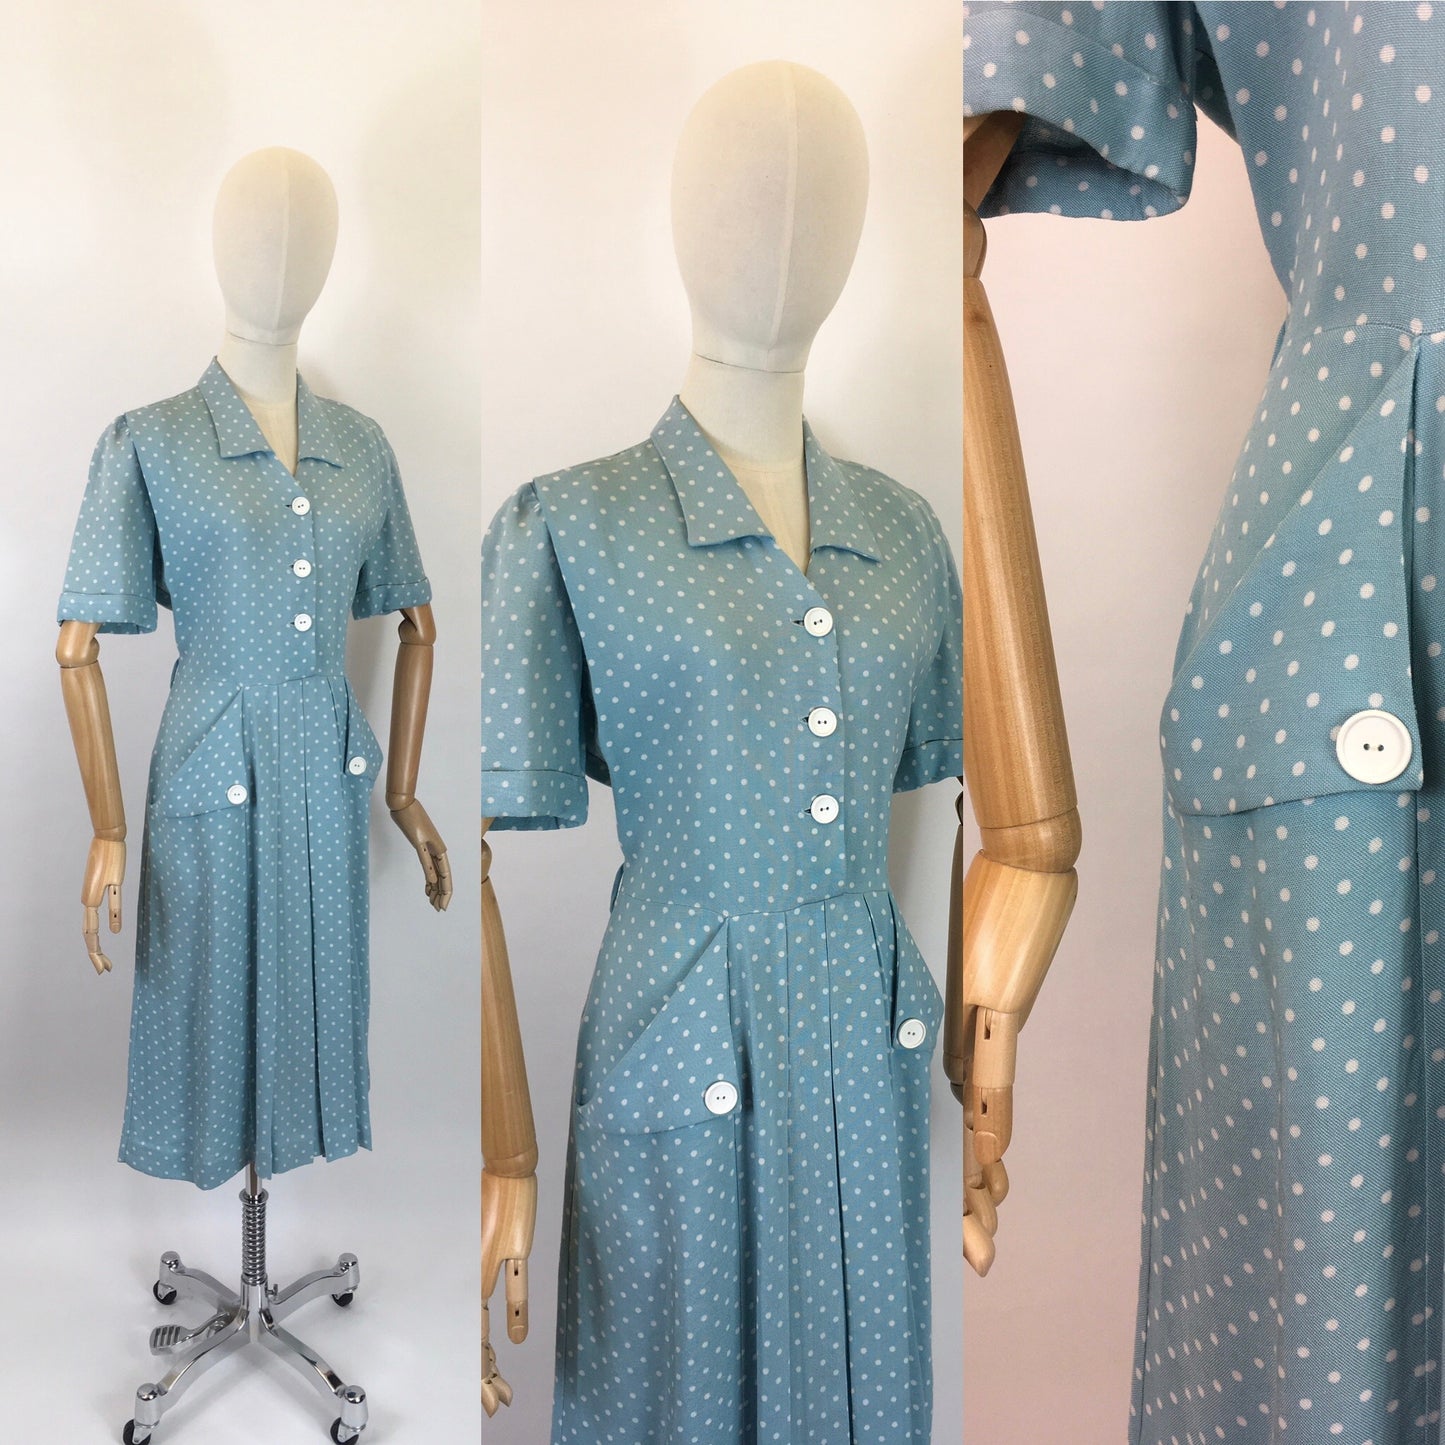 Original 1940’s STUNNING Day Dress - In A Soft Duck Egg Polka Dot Moygoshal Linen